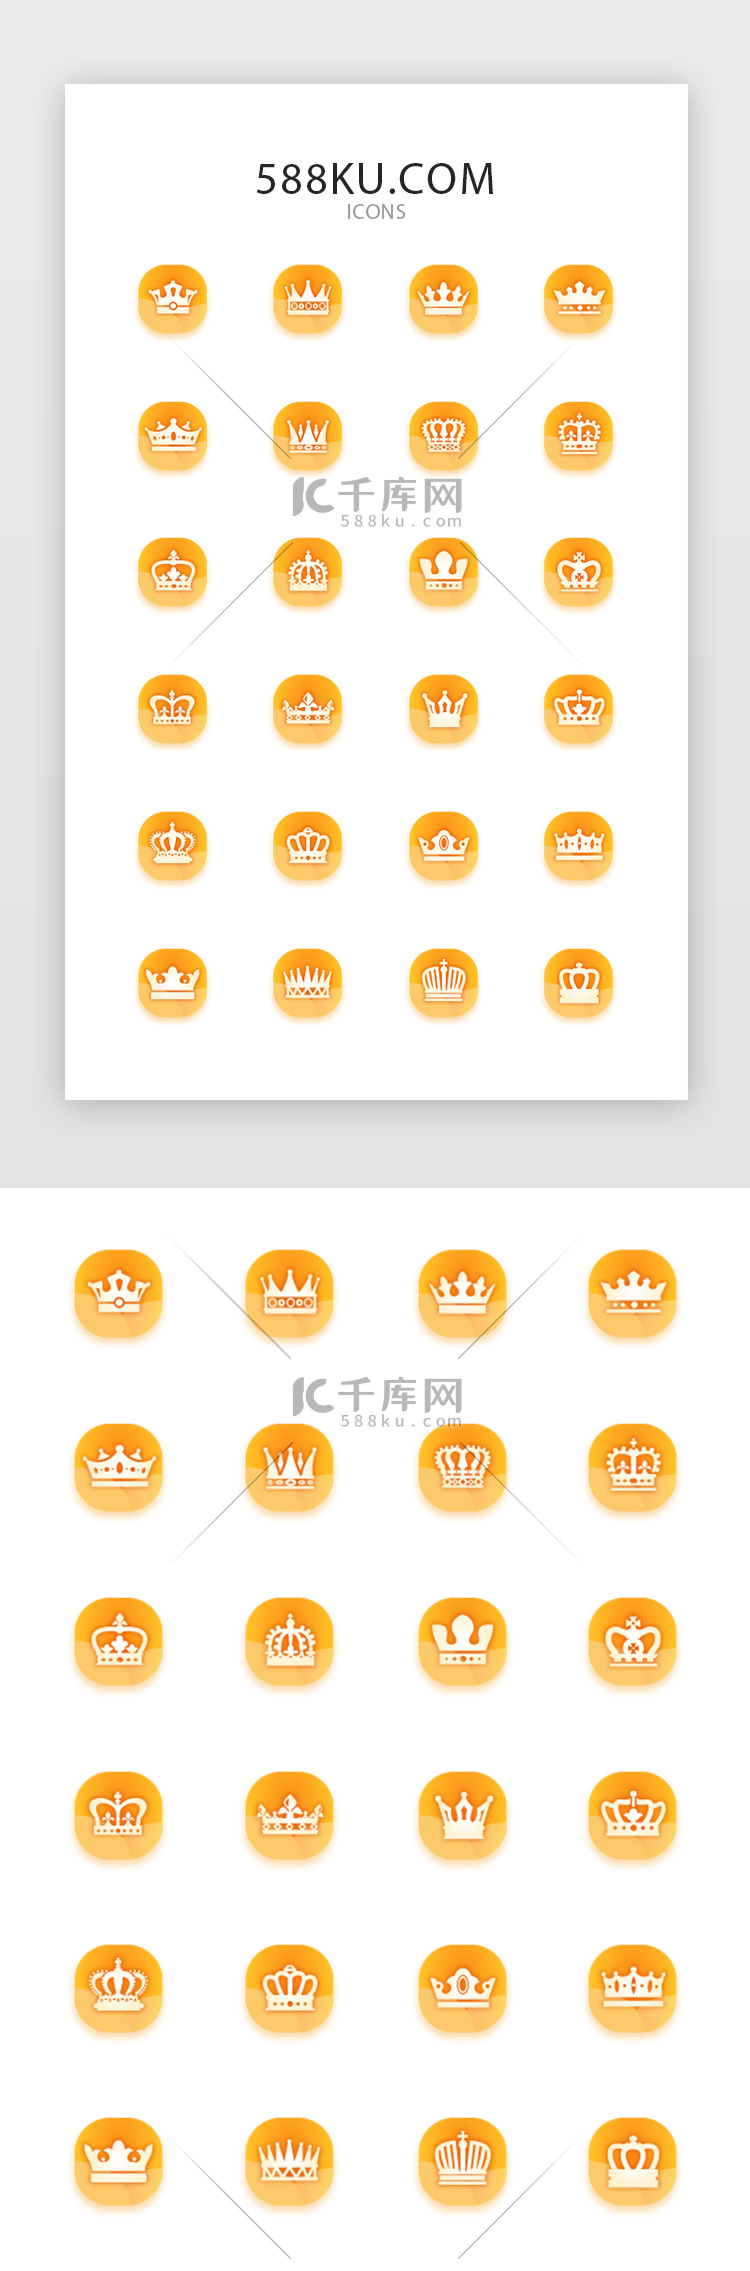 黄色系面型皇冠图标icon